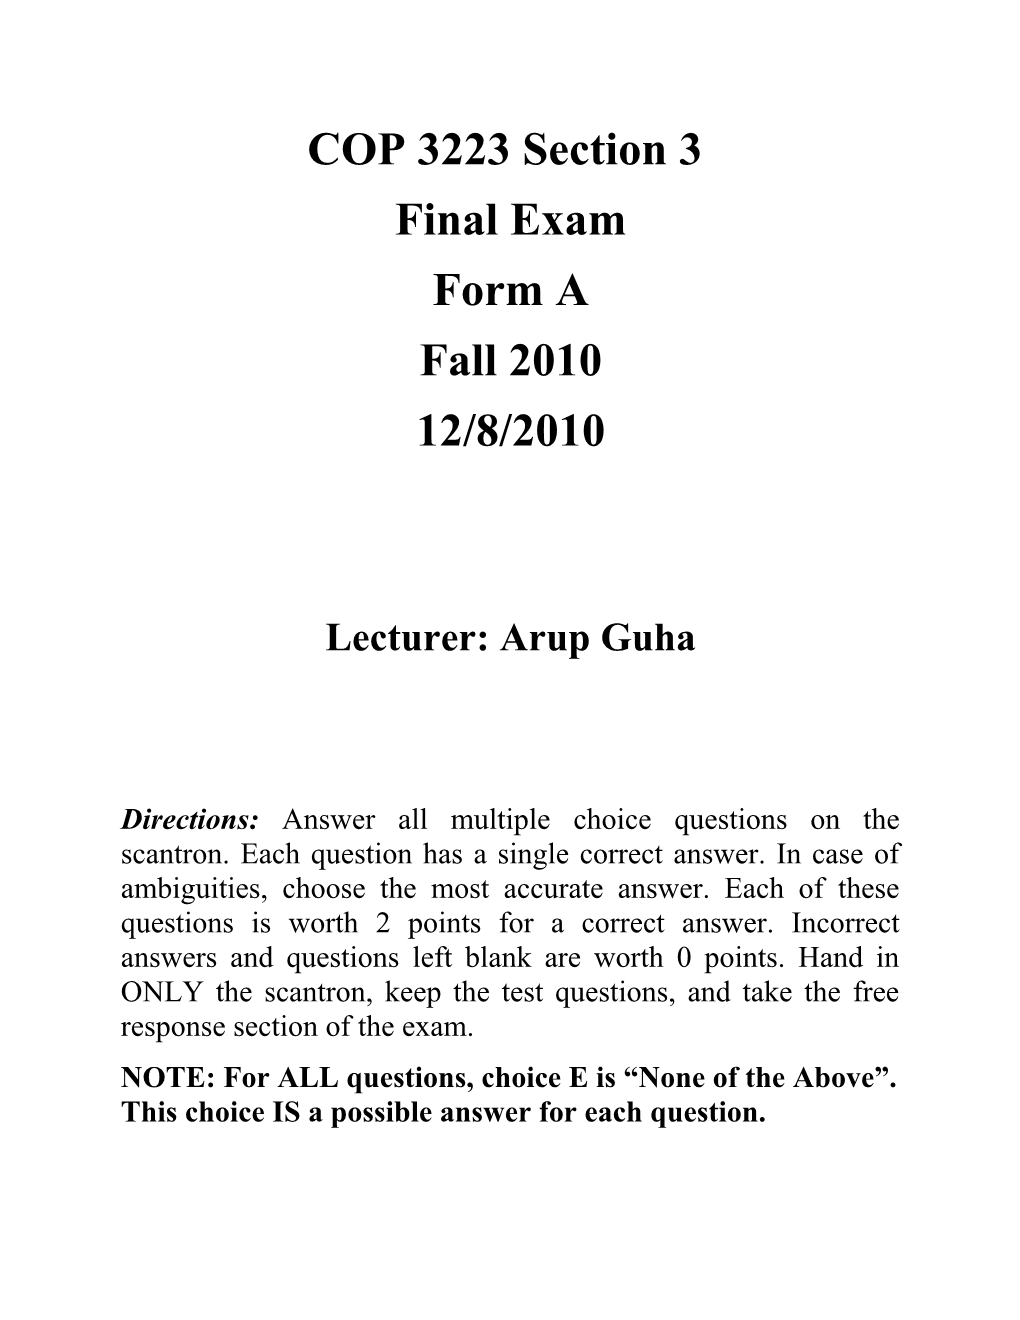 Lecturer: Arup Guha s1